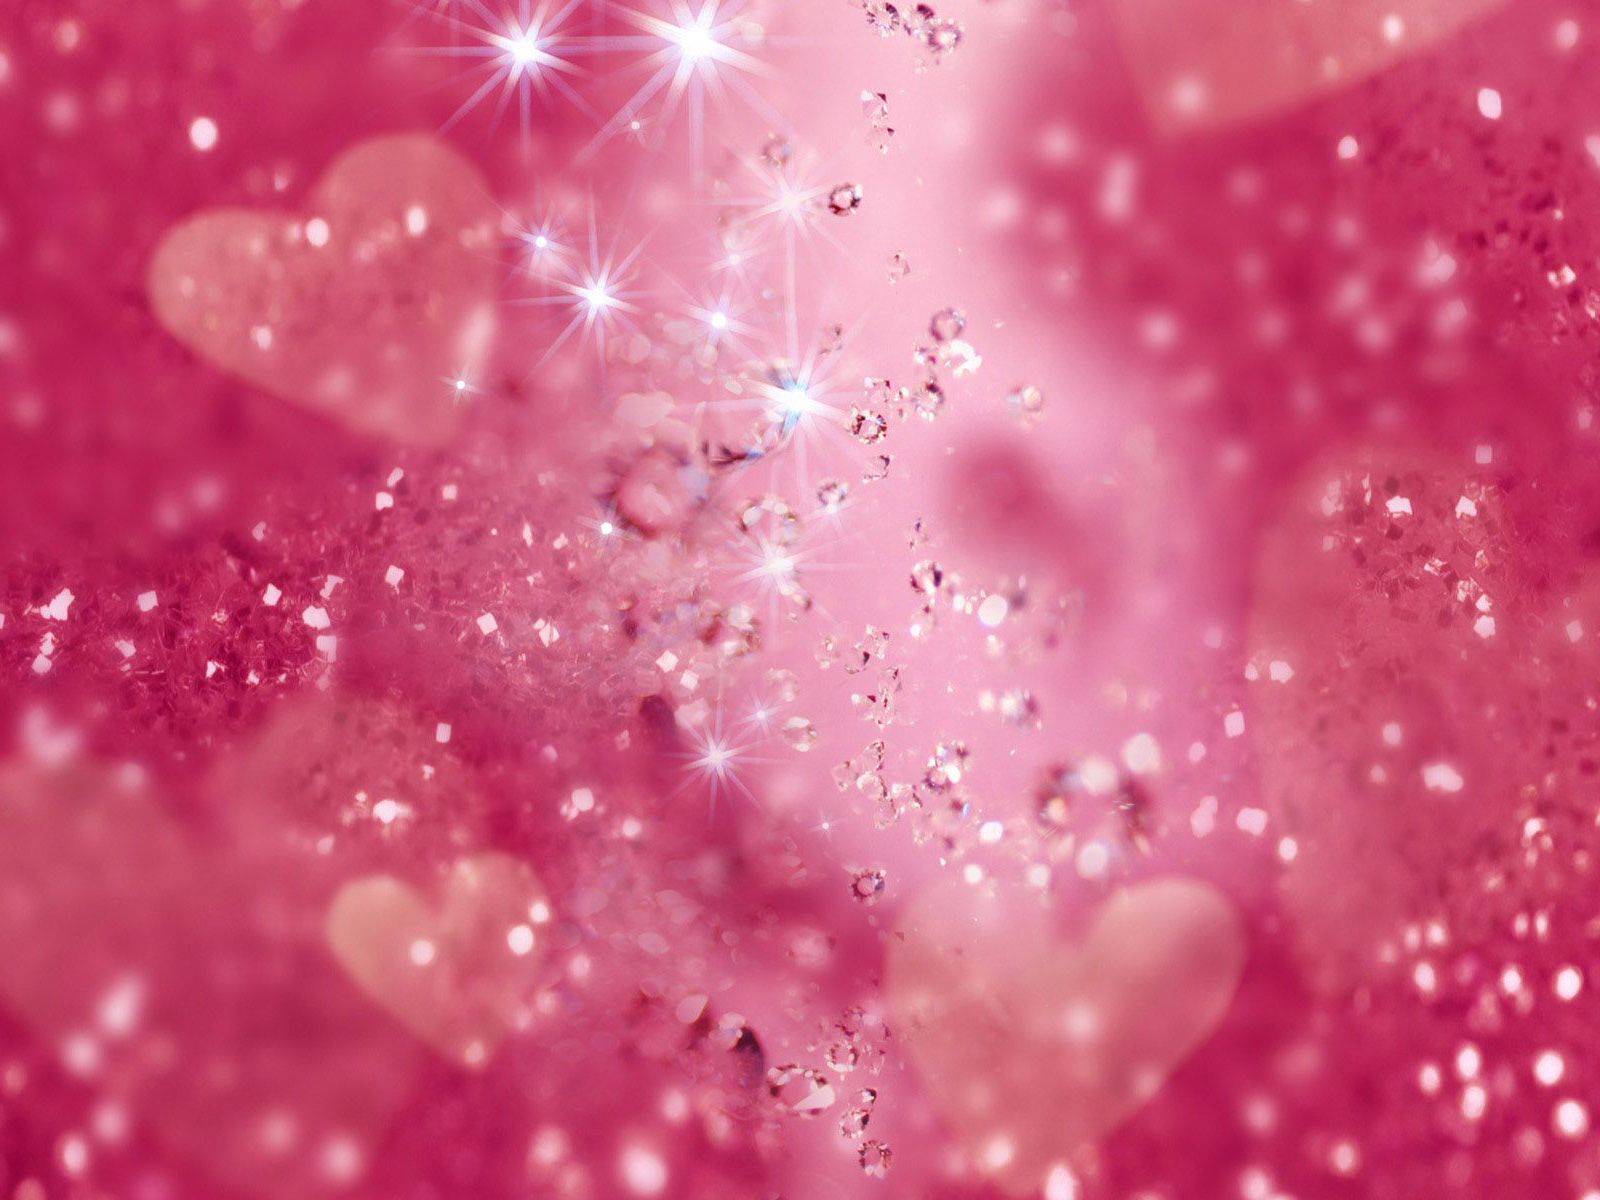  love pink wallpapers cute pink wallpapers pink wallpapers for desktop 1600x1200